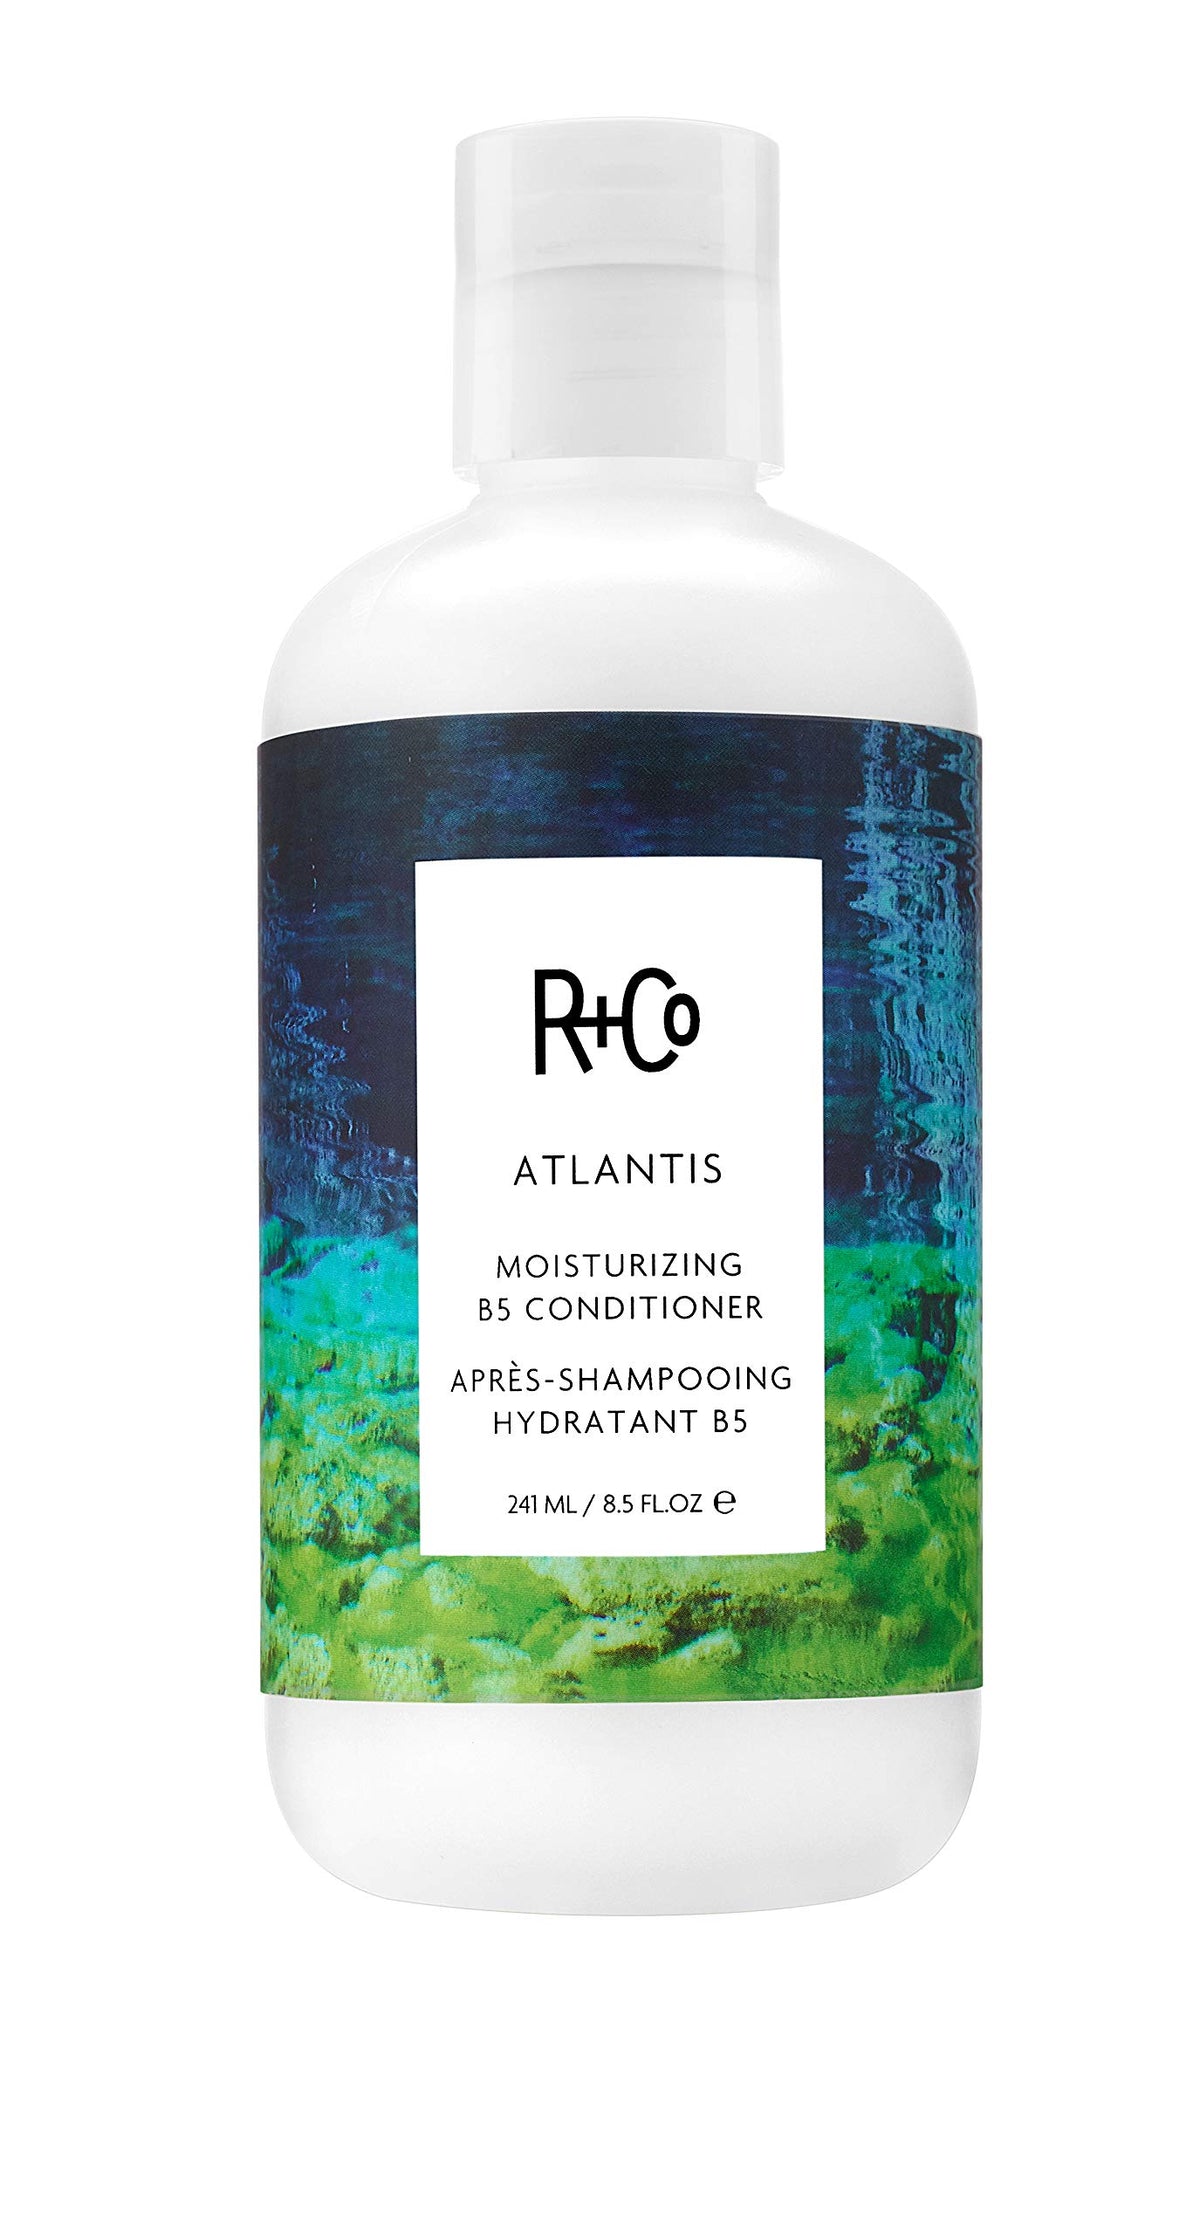 R+Co Atlantis Moisturizing B5 Conditioner, 8.5 Oz